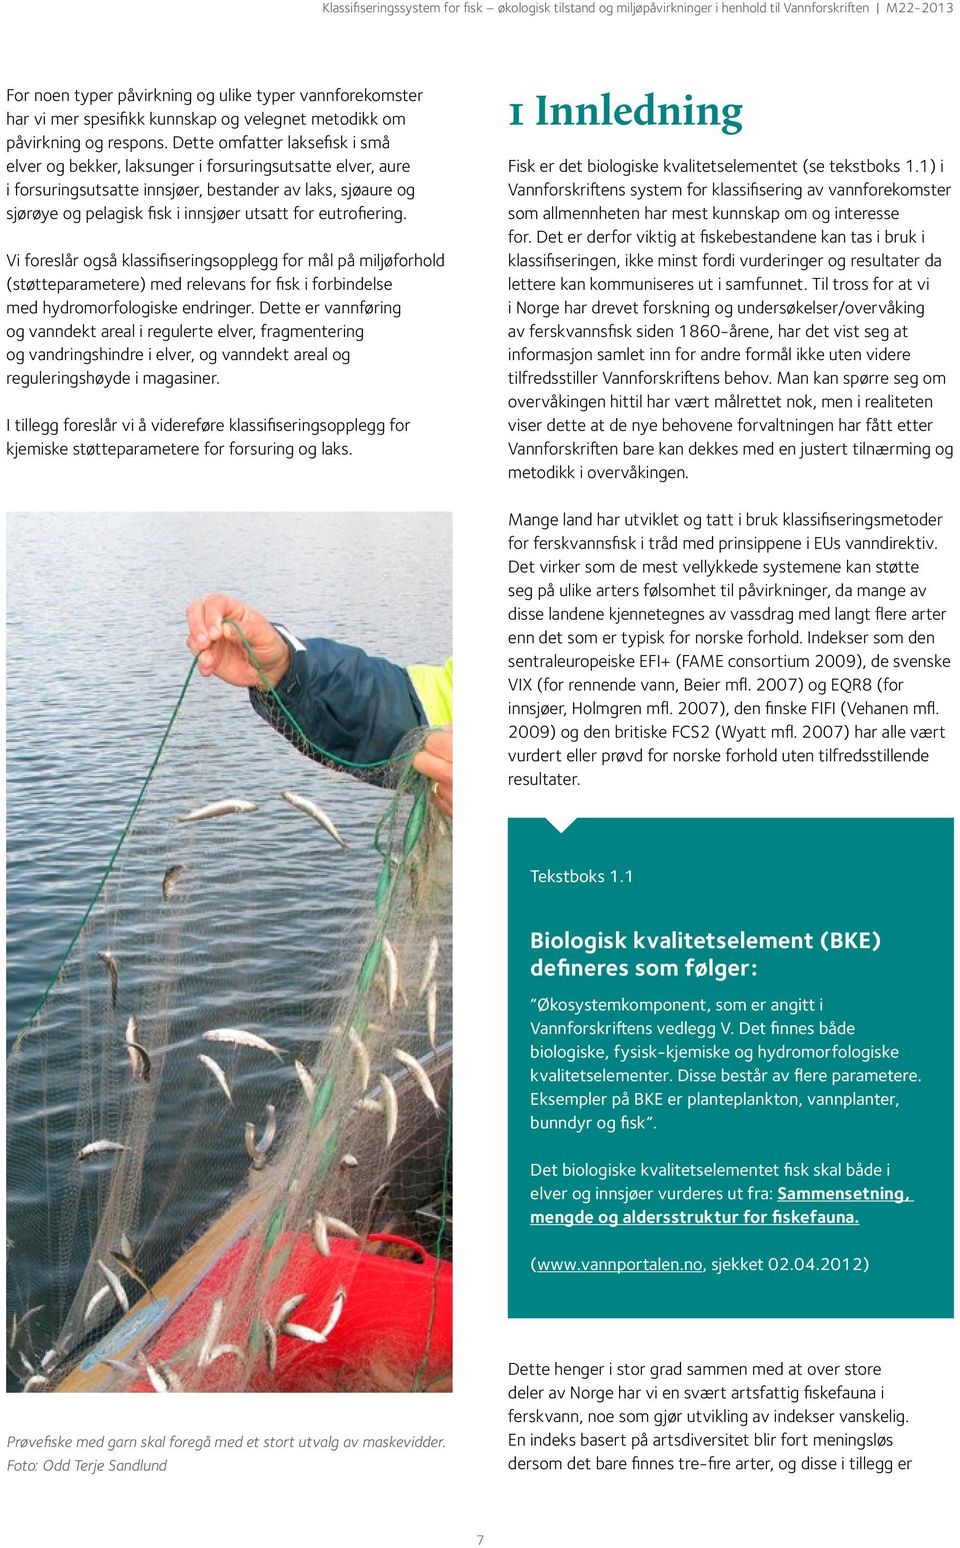 eutrofiering. Vi foreslår også klassifiseringsopplegg for mål på miljøforhold (støtteparametere) med relevans for fisk i forbindelse med hydromorfologiske endringer.